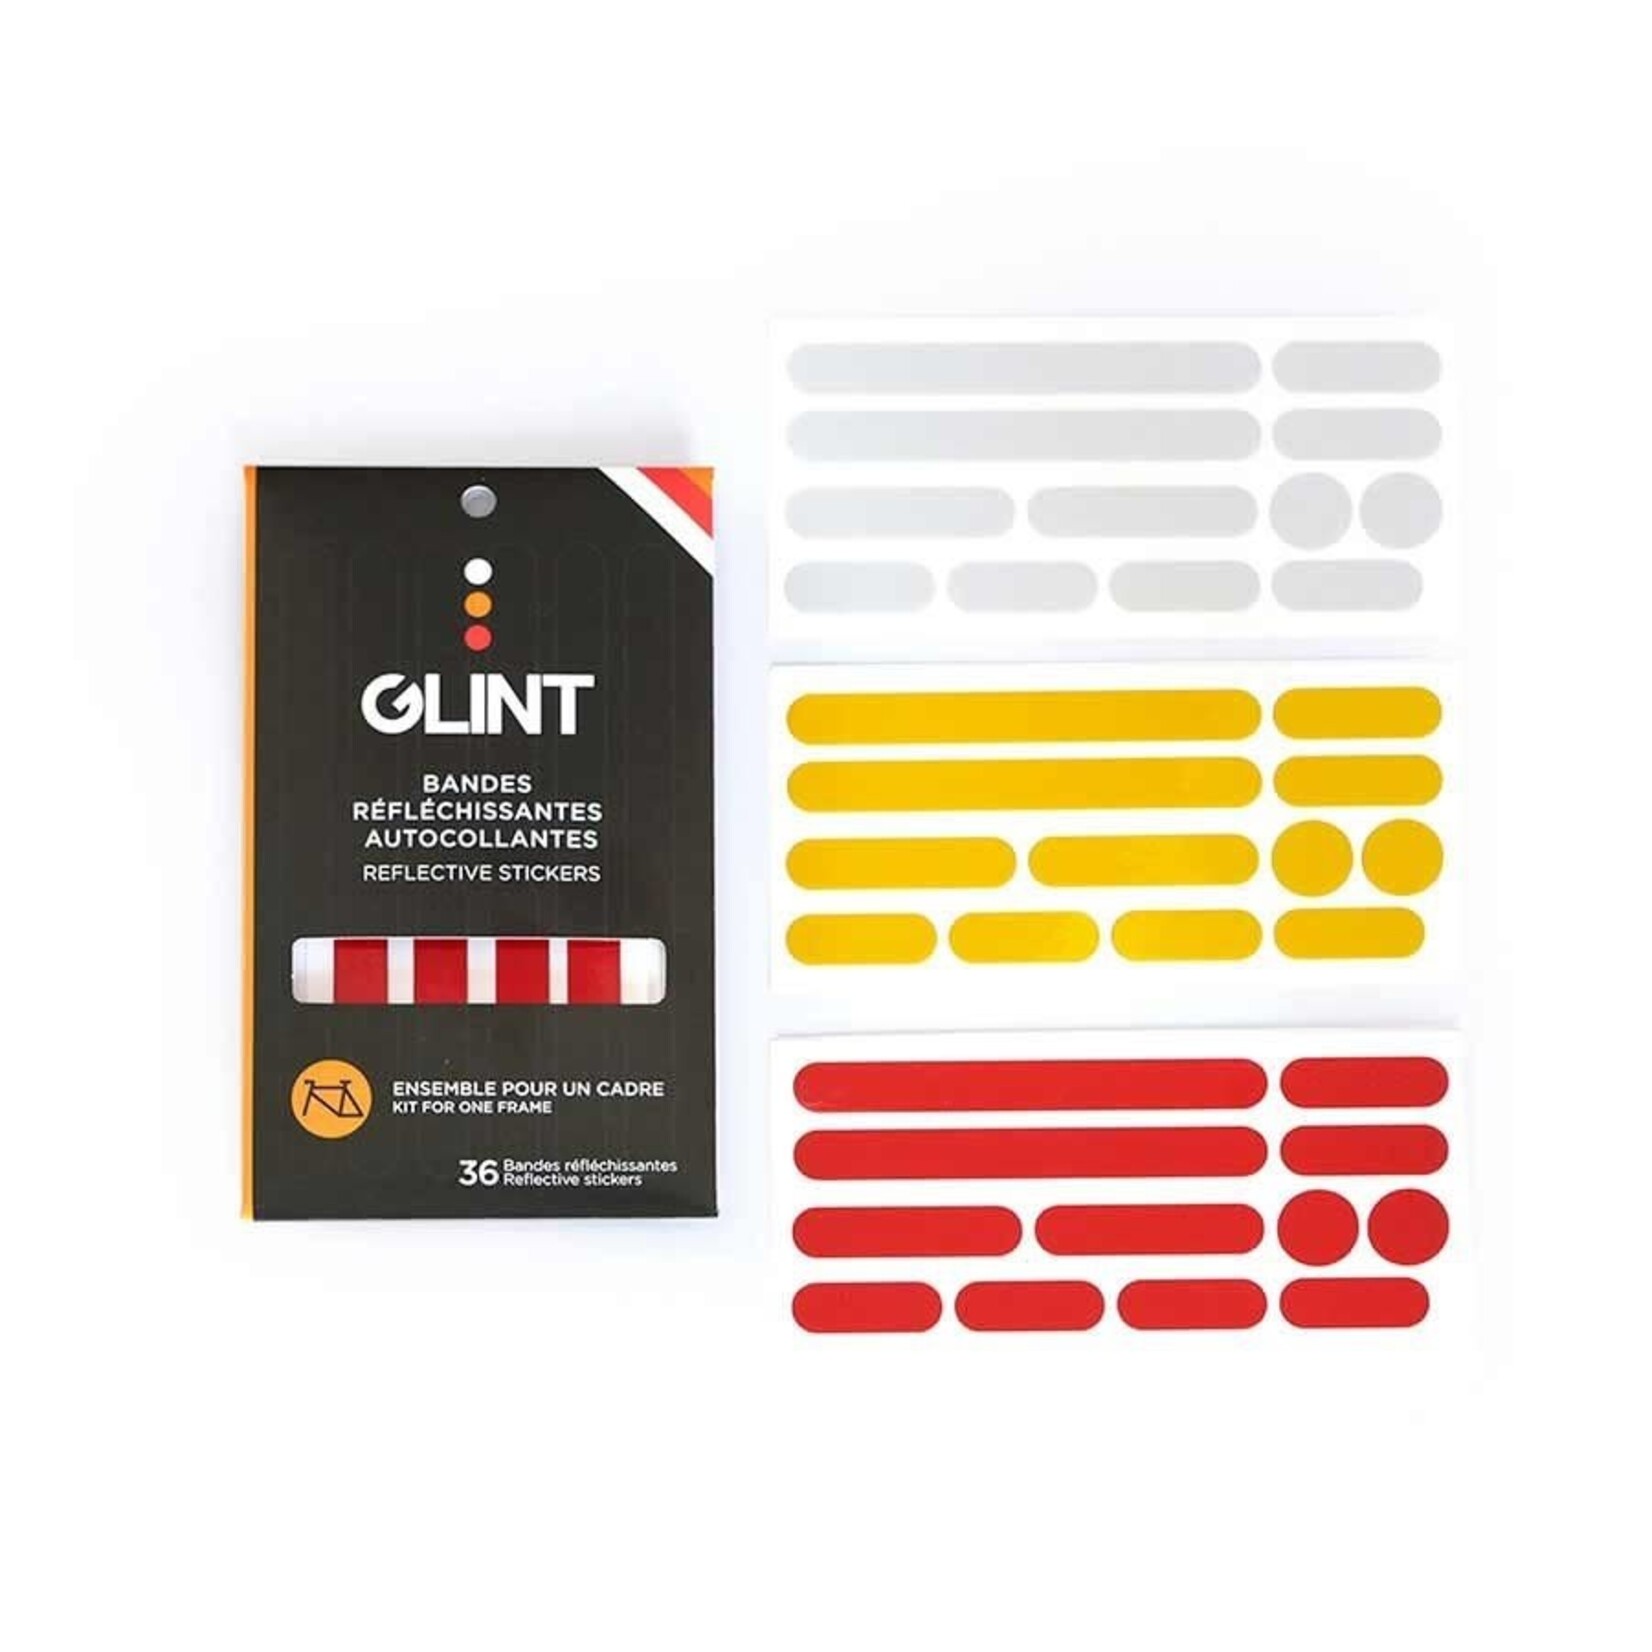 GLINT Reflective Reflective Frame Stickers